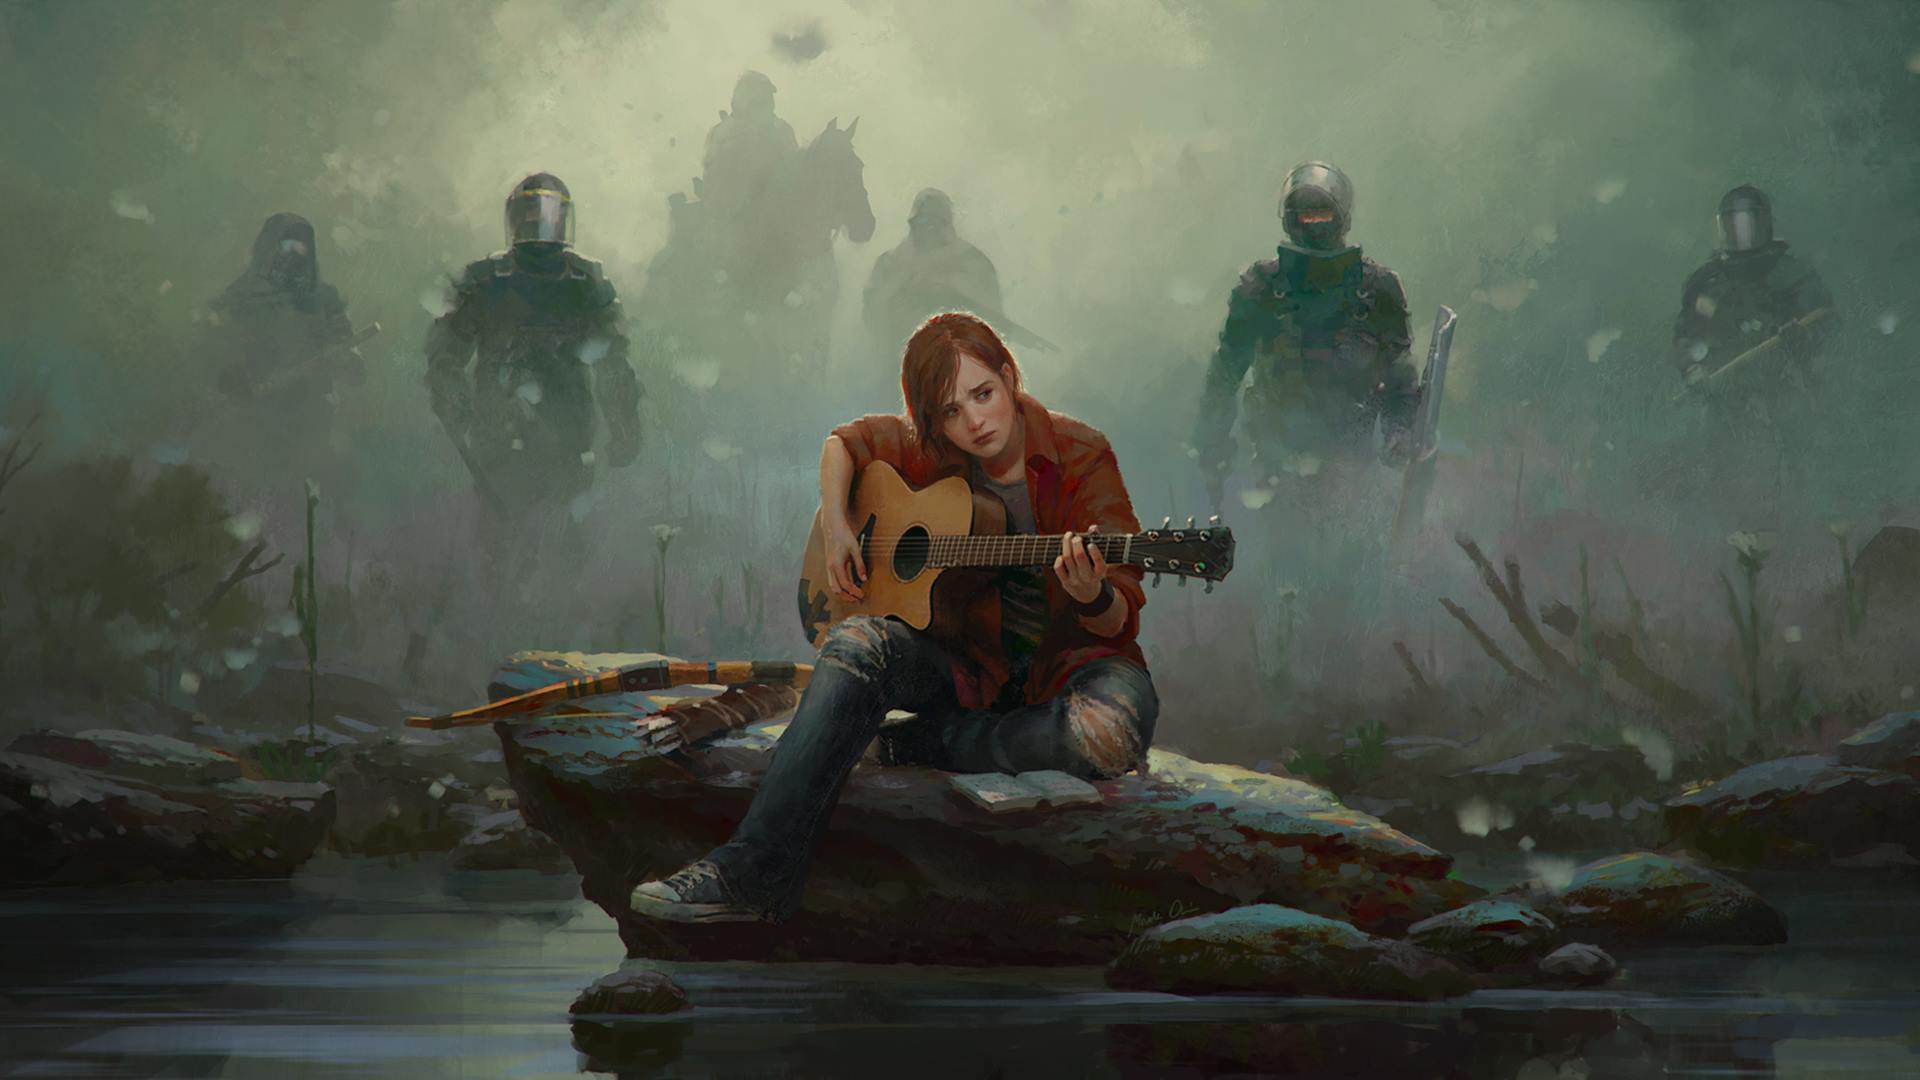 The Last of Us 2: Dublador de Joel comenta sobre vazamentos recentes